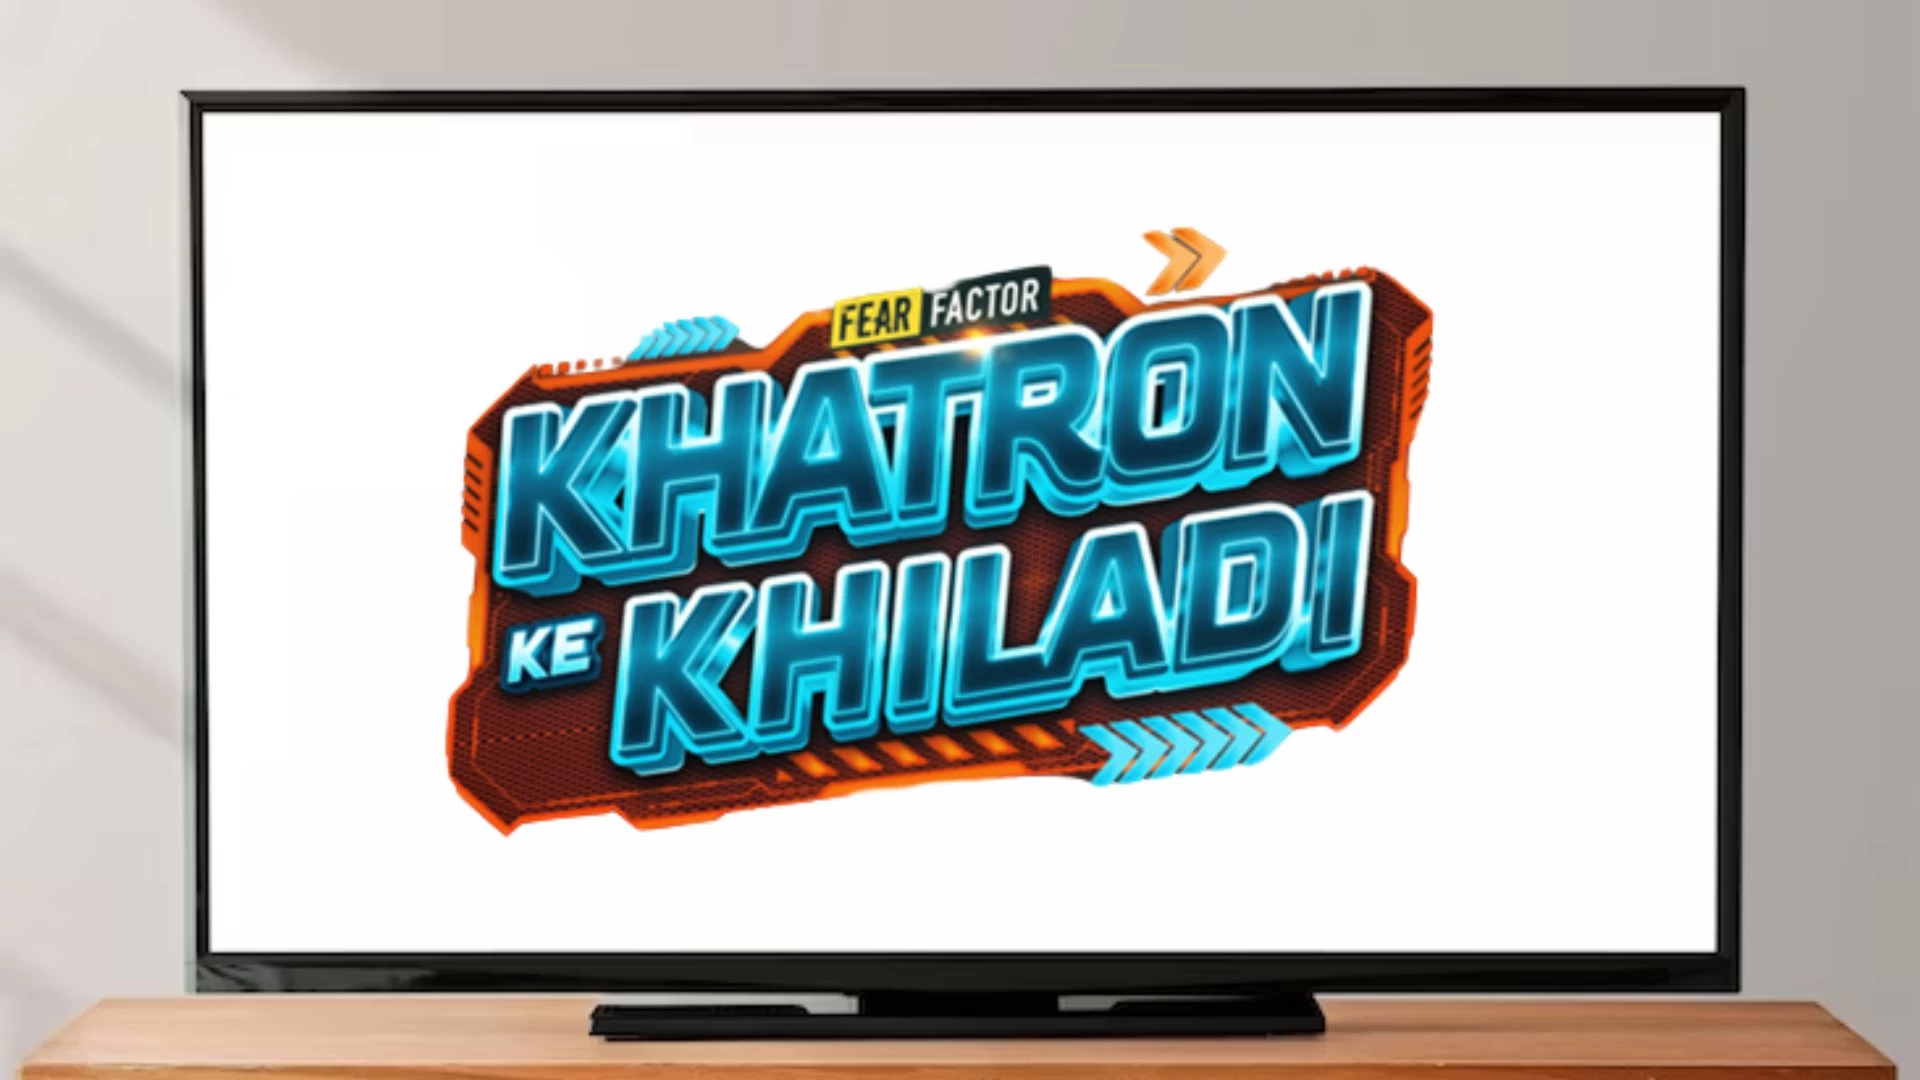 Who Was Eliminated in Khatron Ke Khiladi Season 13 Today Episode? Who are the Finalists of Khatron Ke Khiladi Season 13?